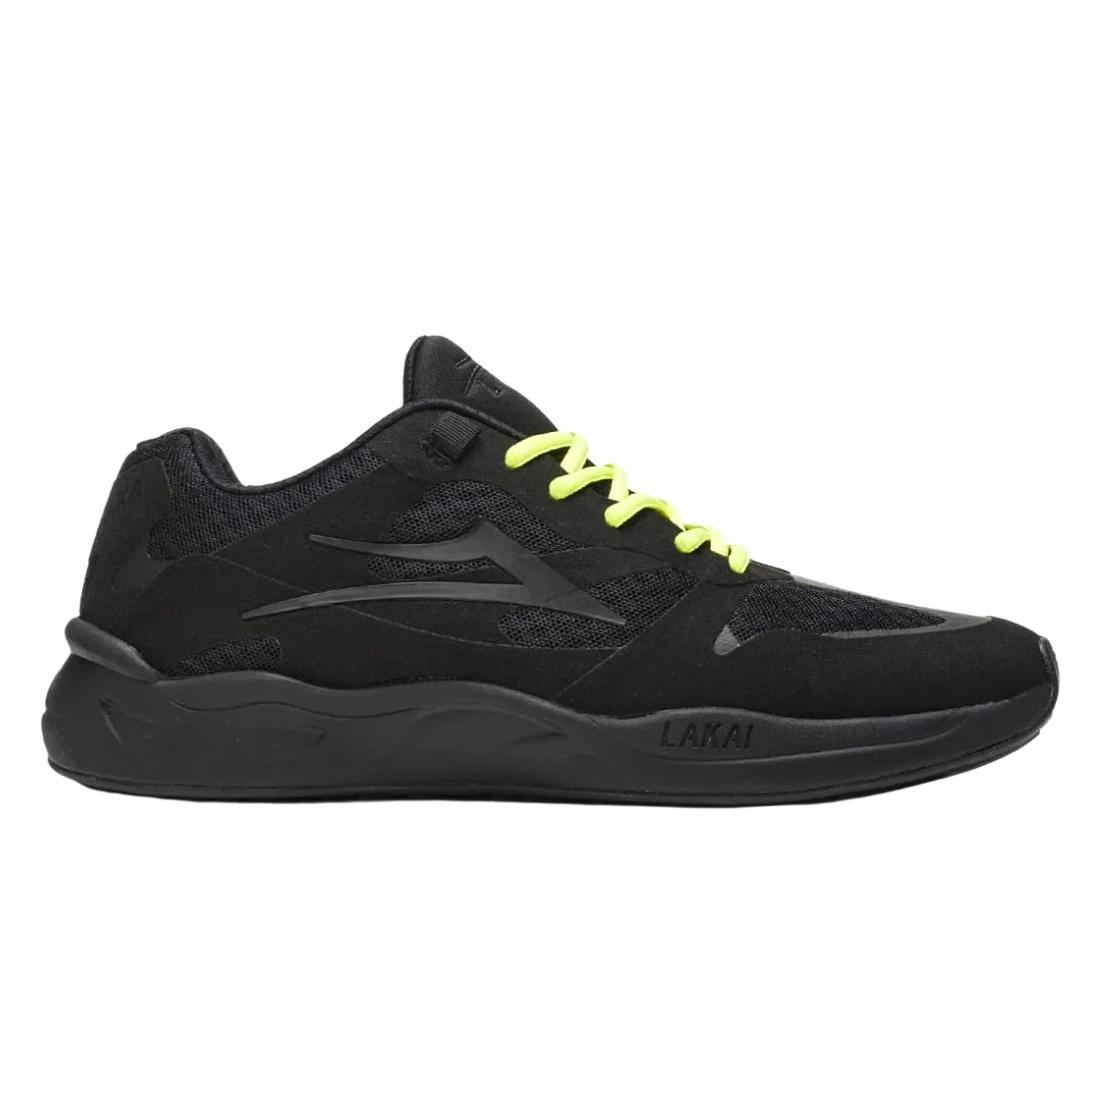 Lakai Evo 2.0 Shoes - Black Neon Green Suede - Mens Running Shoes/Trainers by Lakai